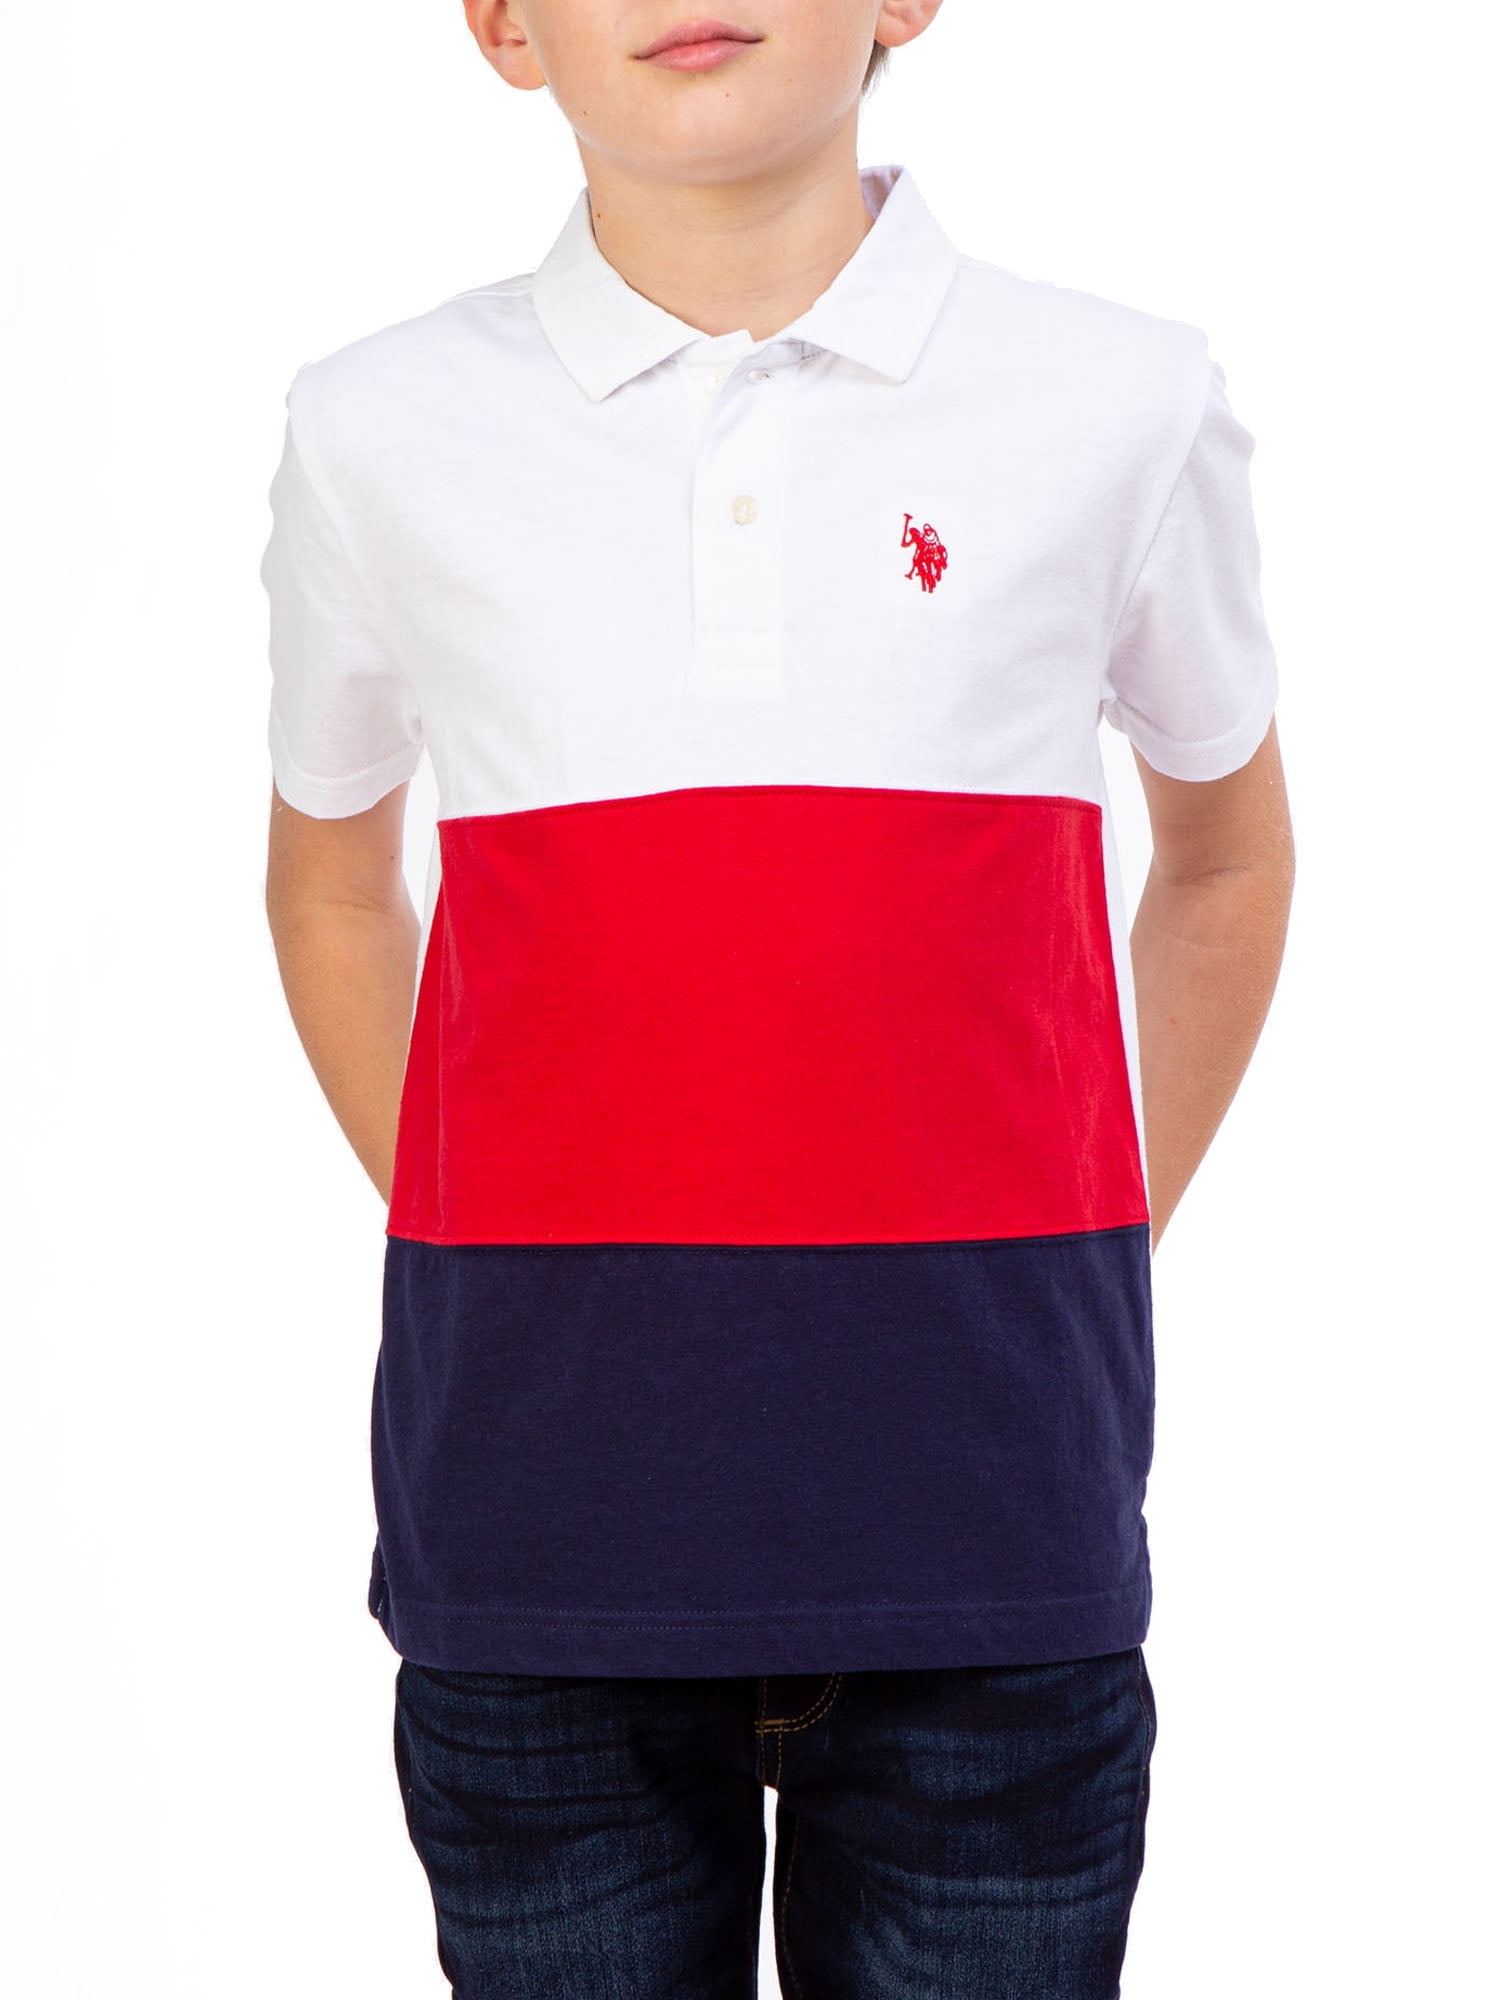 US Polo Assn Childrens Apparel U.S Boys Little Sleeve Woven Shirt 